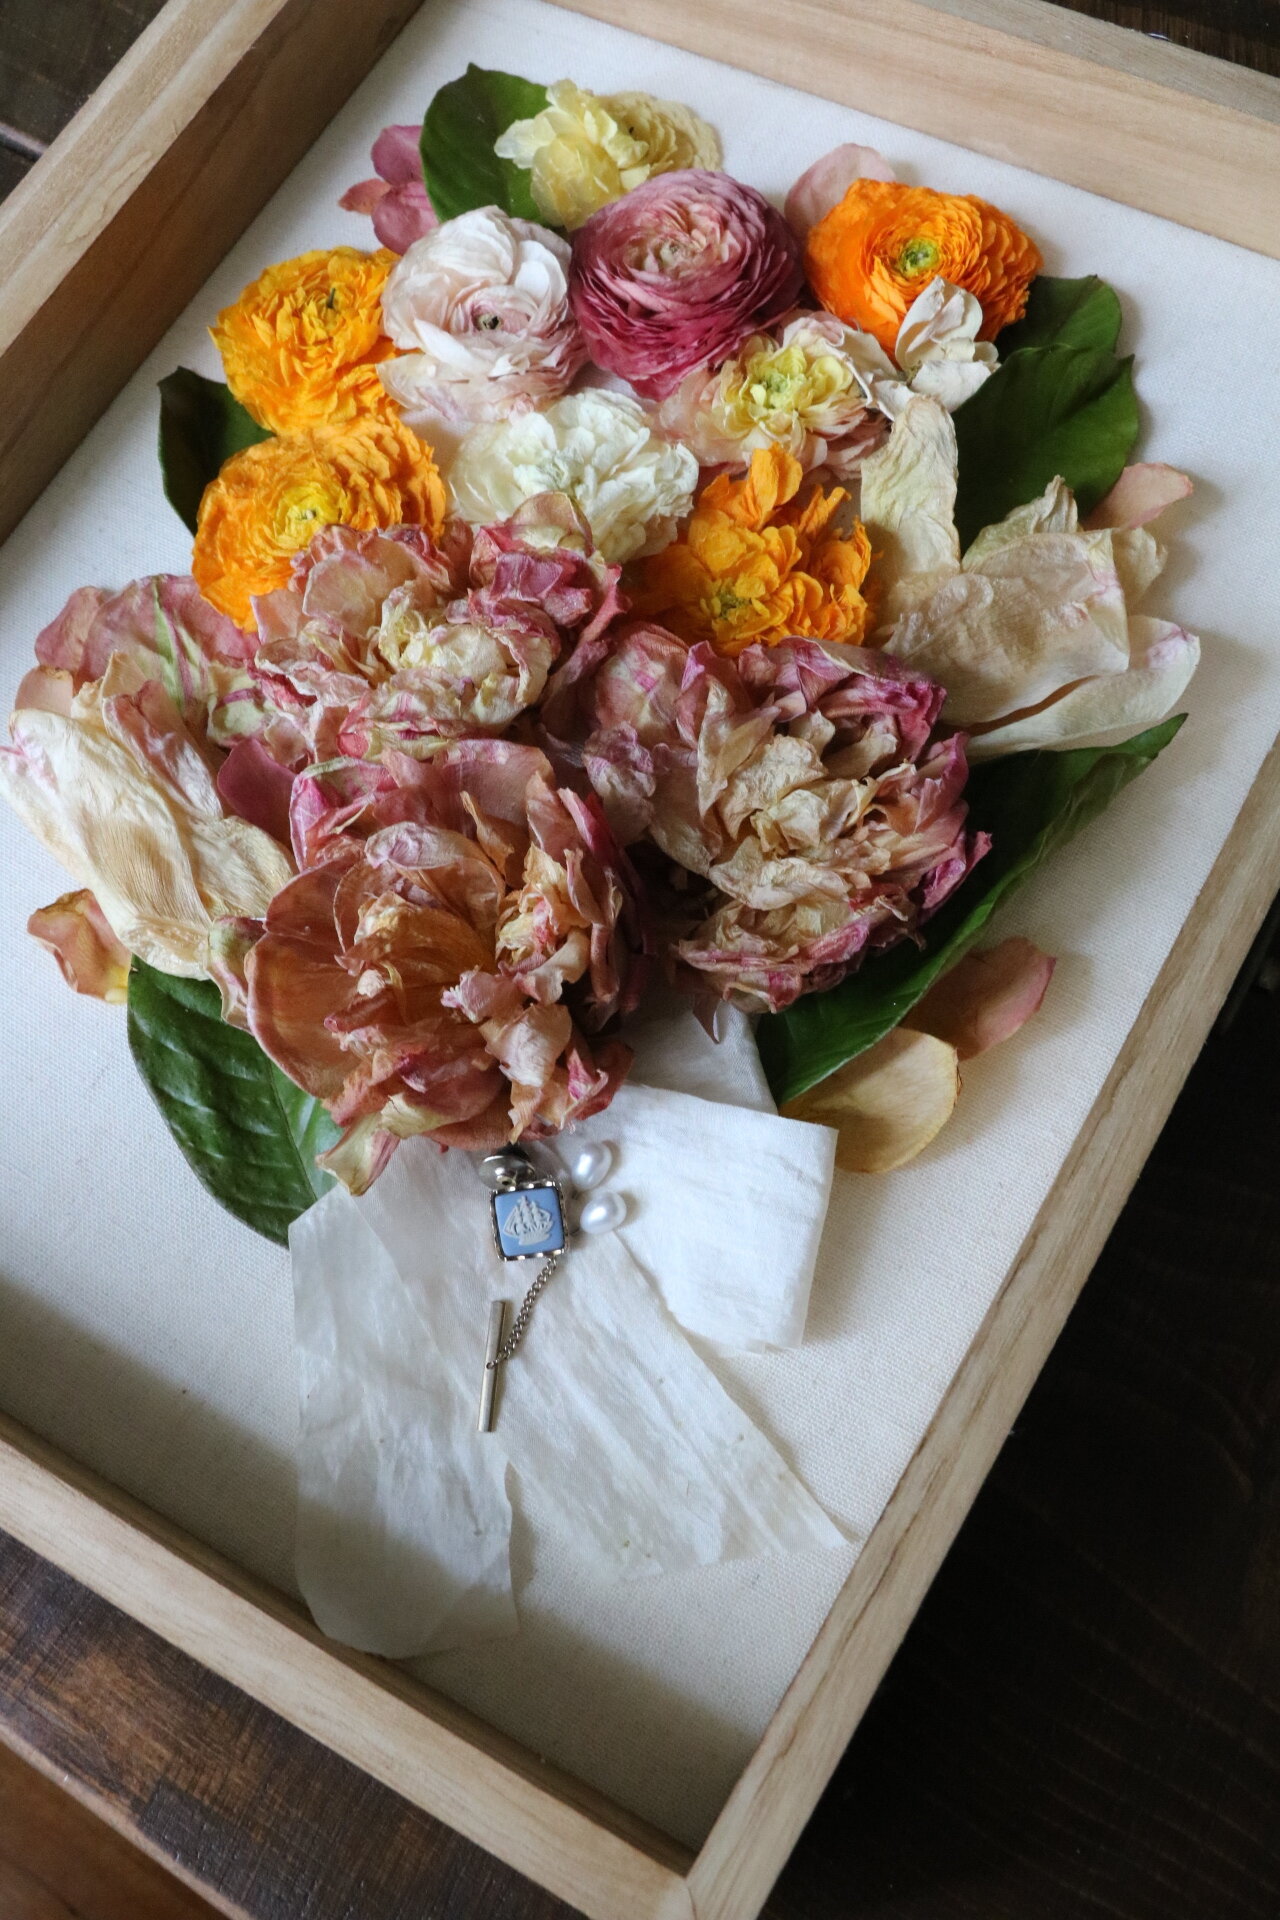 The Best Way to Preserve Your Wedding Bouquet: Professional vs. DIY Methods